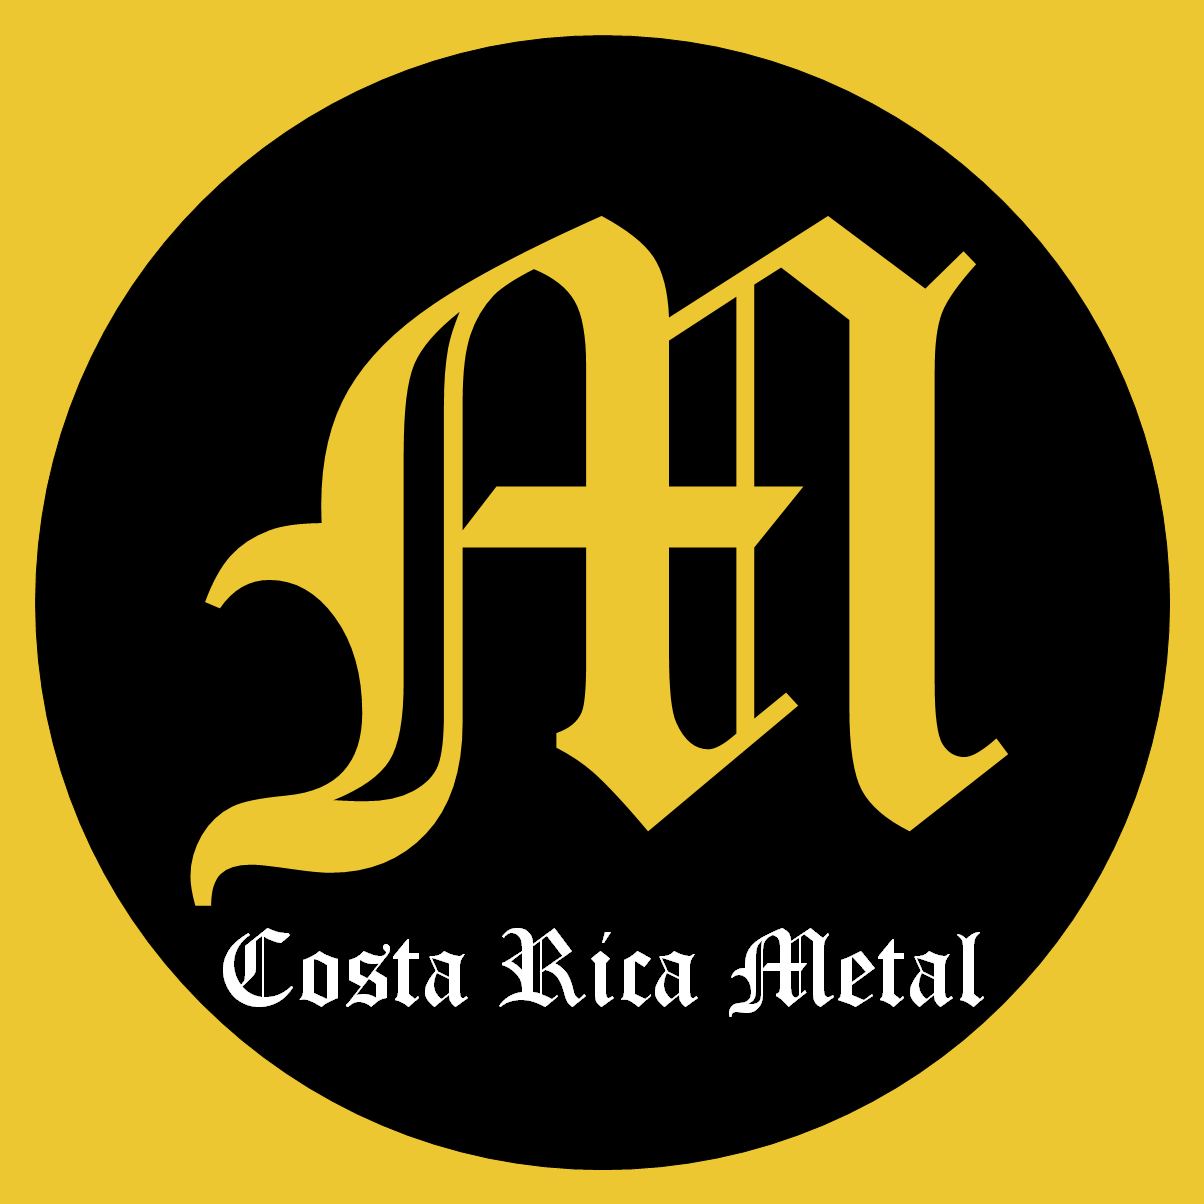 Costa Rica Metal Radio